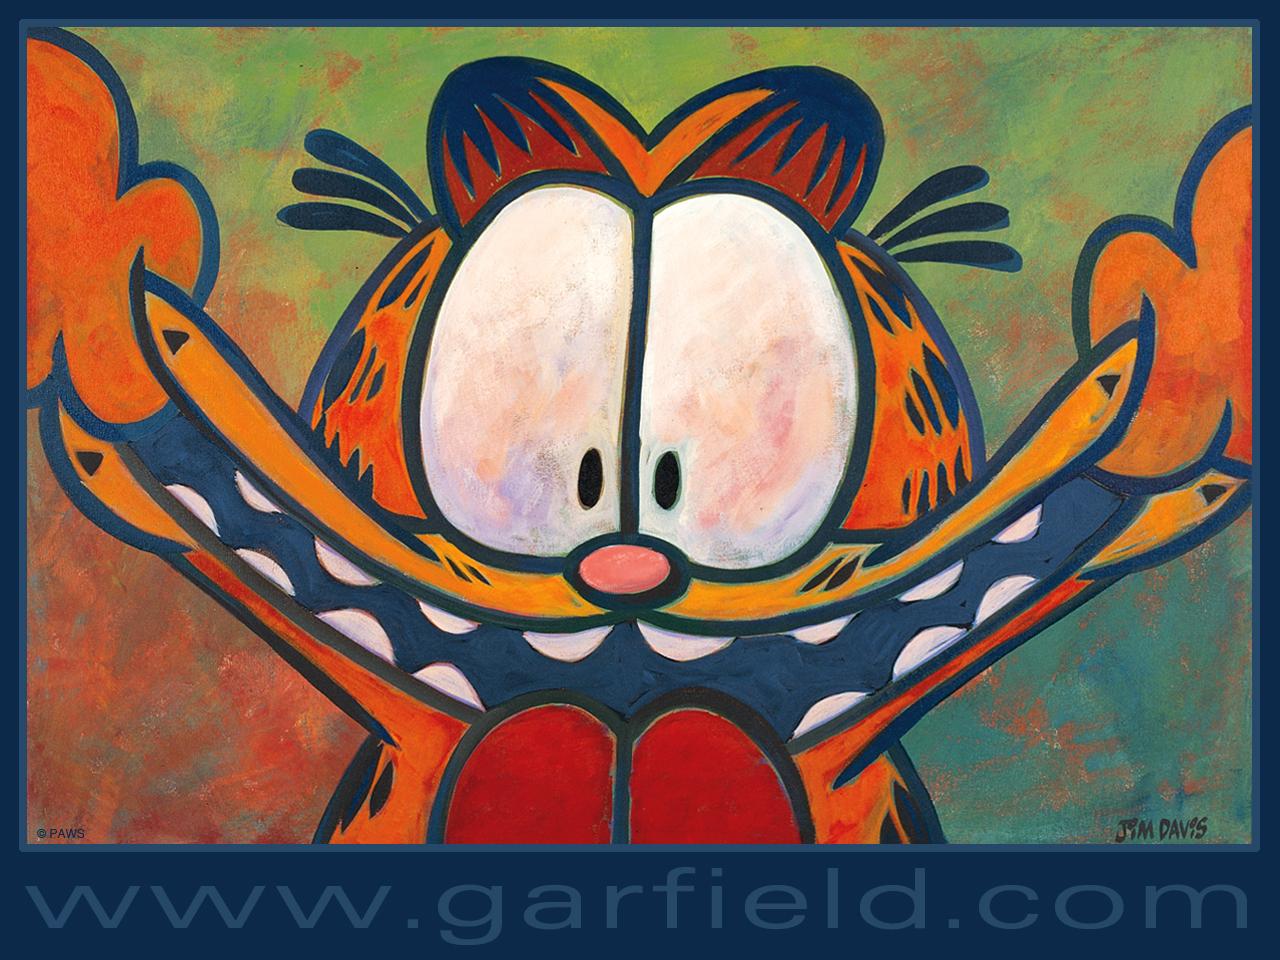 Garfield Image Wallpaper Photos